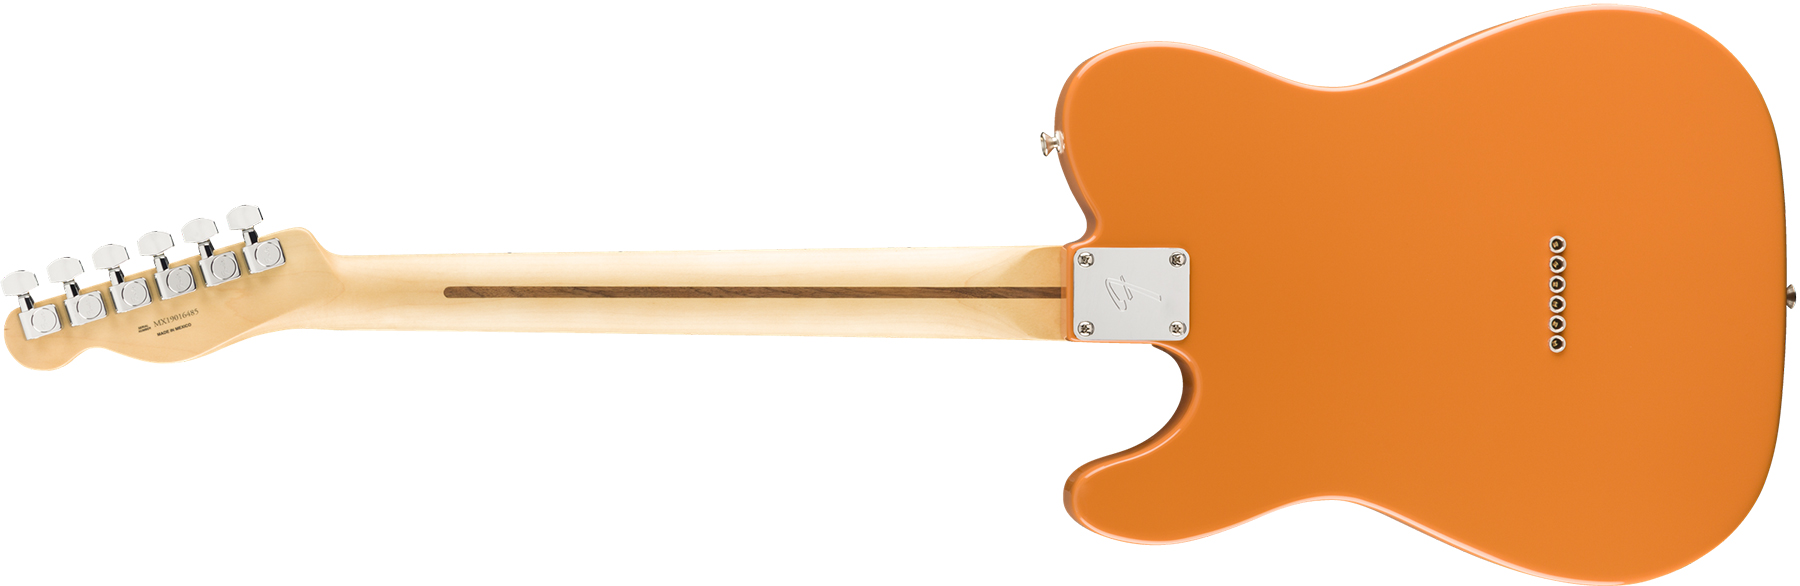 Fender Tele Player Mex Mn - Capri Orange - Tel shape electric guitar - Variation 1